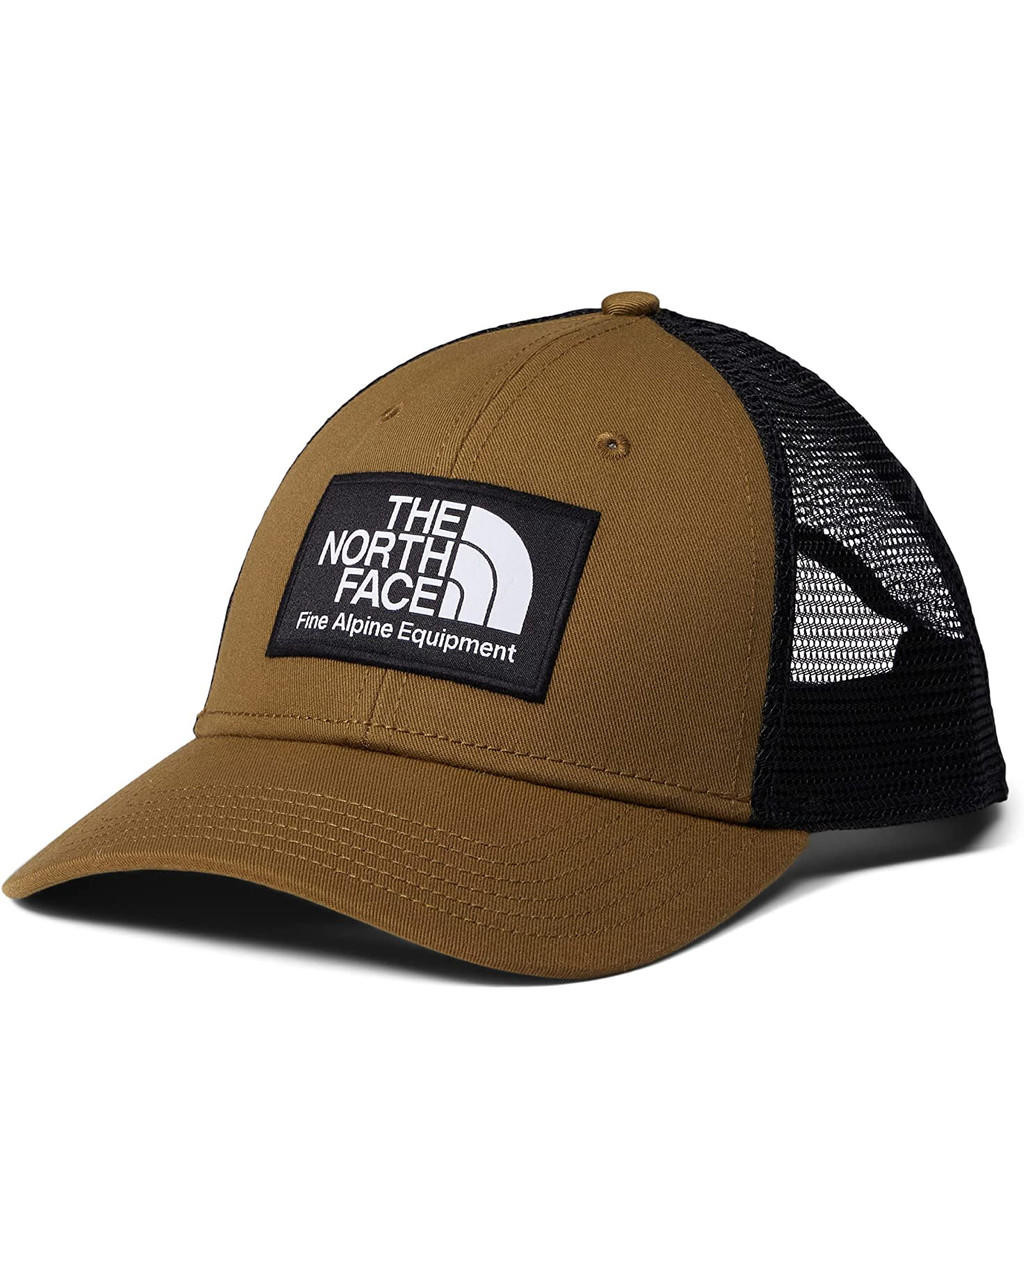 Verovering Fonetiek Maestro The North Face Mudder Trucker Hat | The North Face